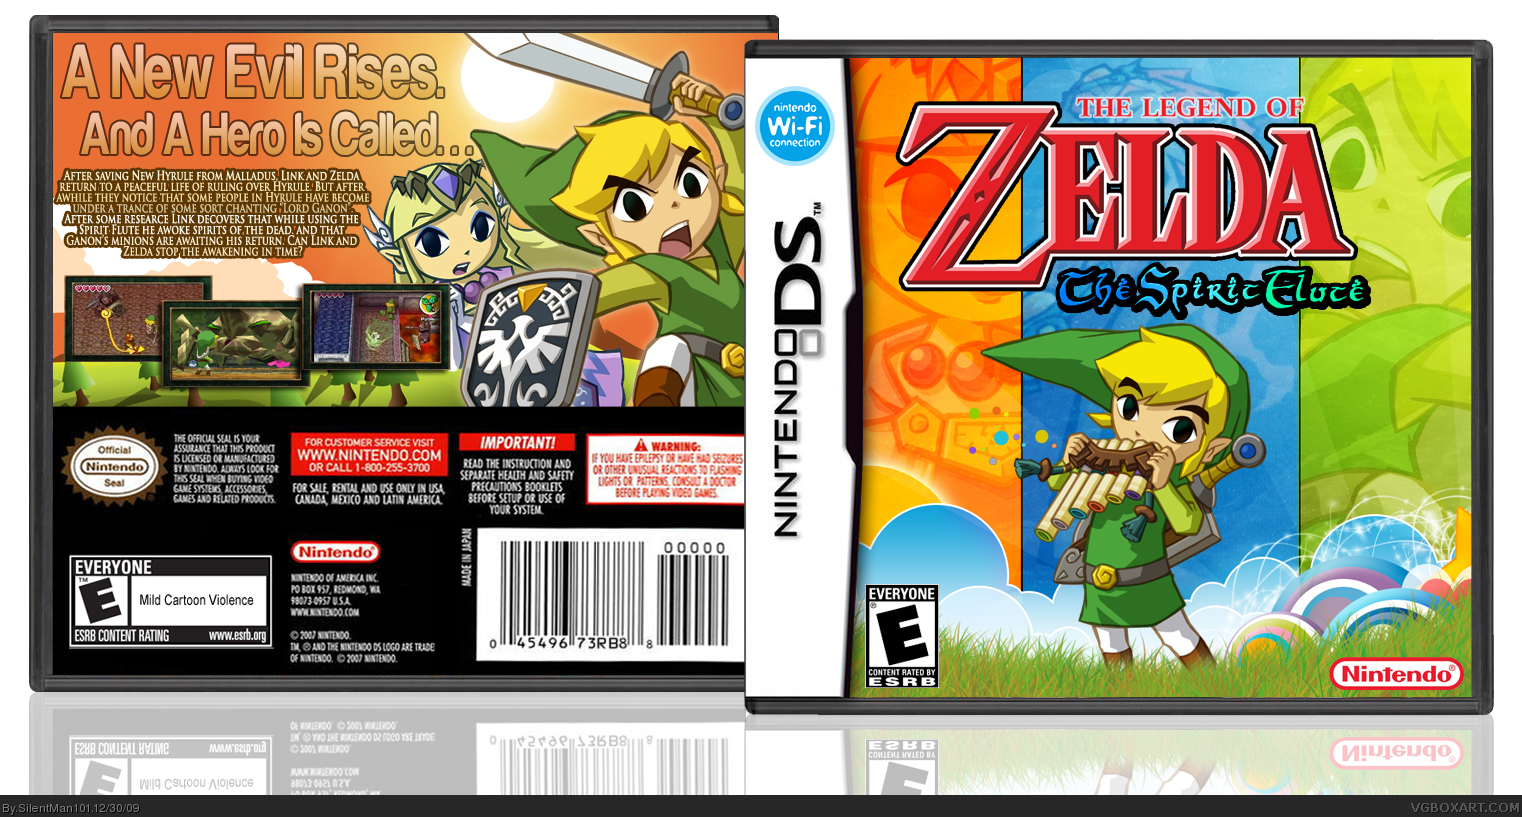 The Legend of Zelda: The Spirit Flute box cover